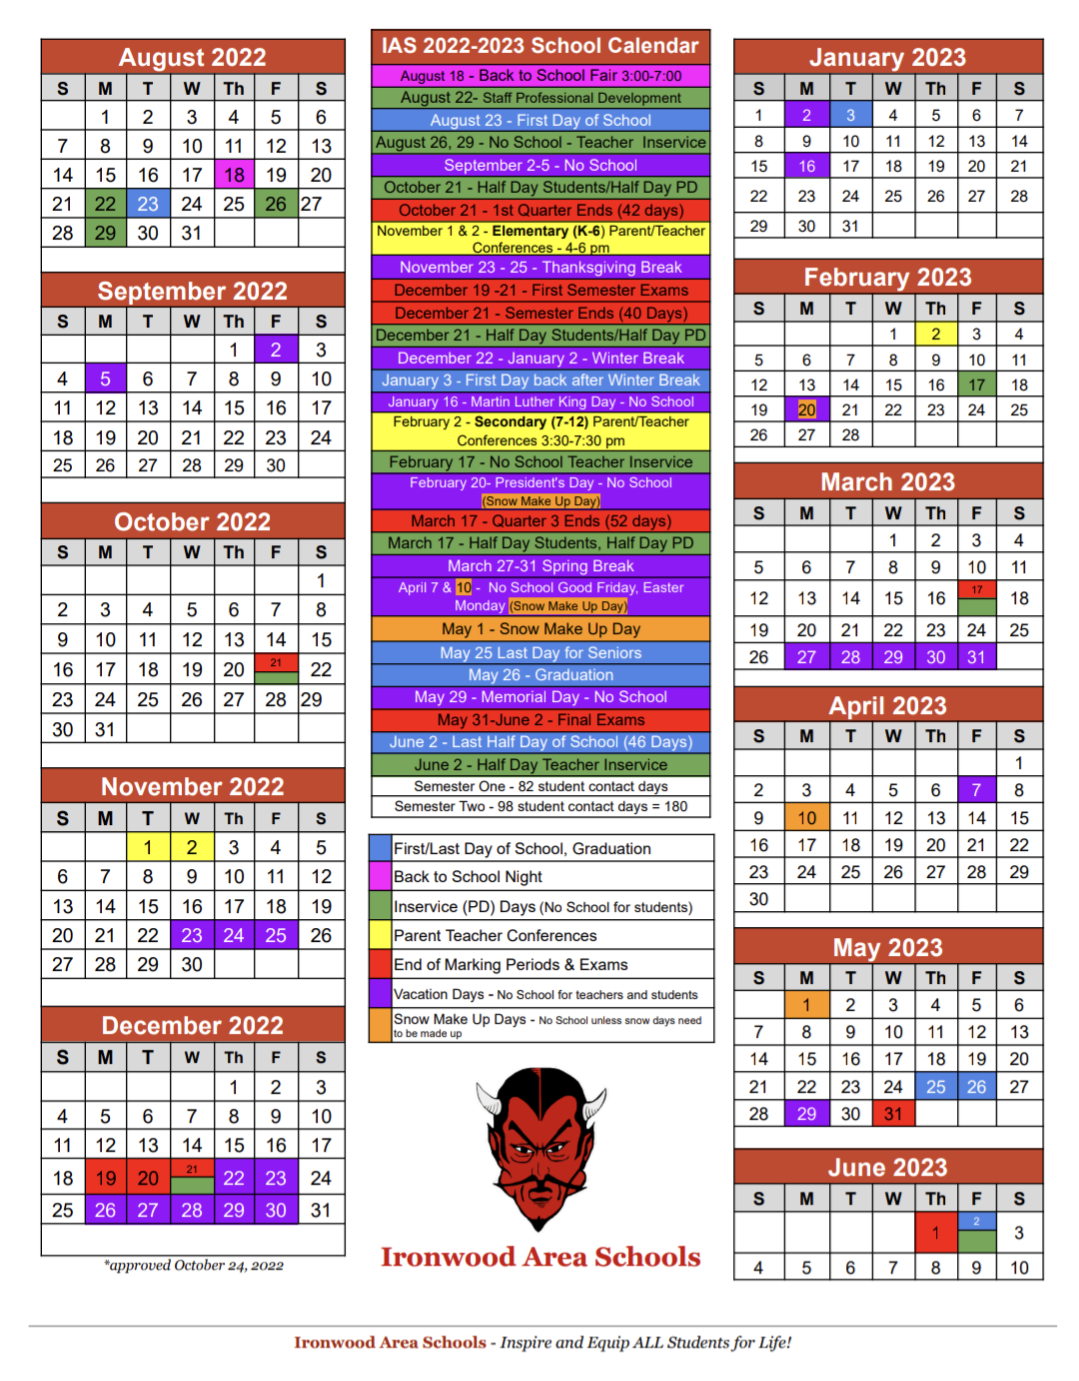 Revised 2022-23 Calendar